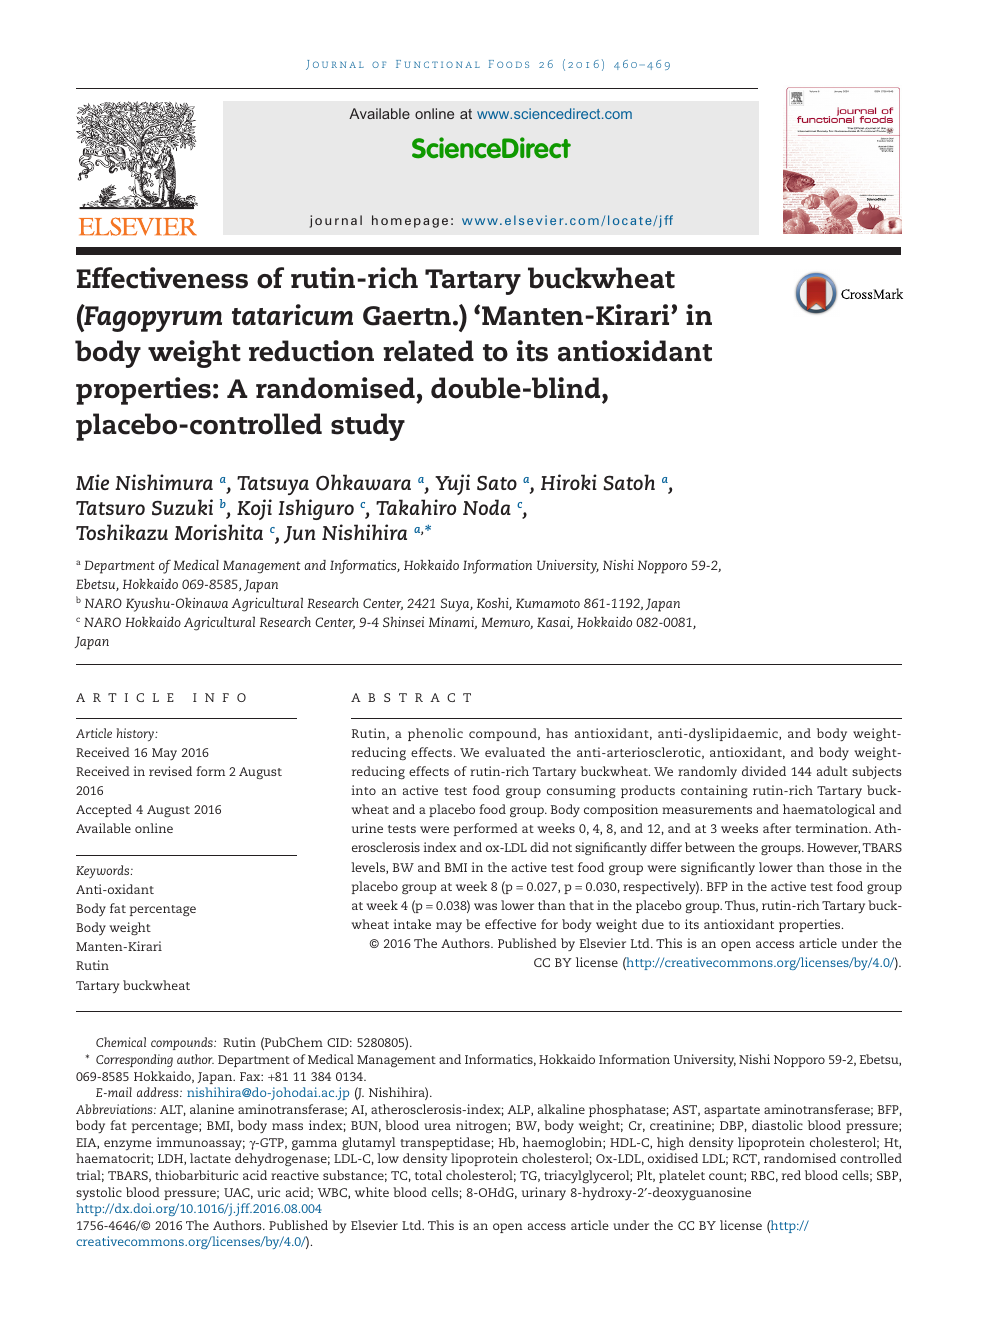 Cholesterol-Lowering Activity of Tartary Buckwheat Protein